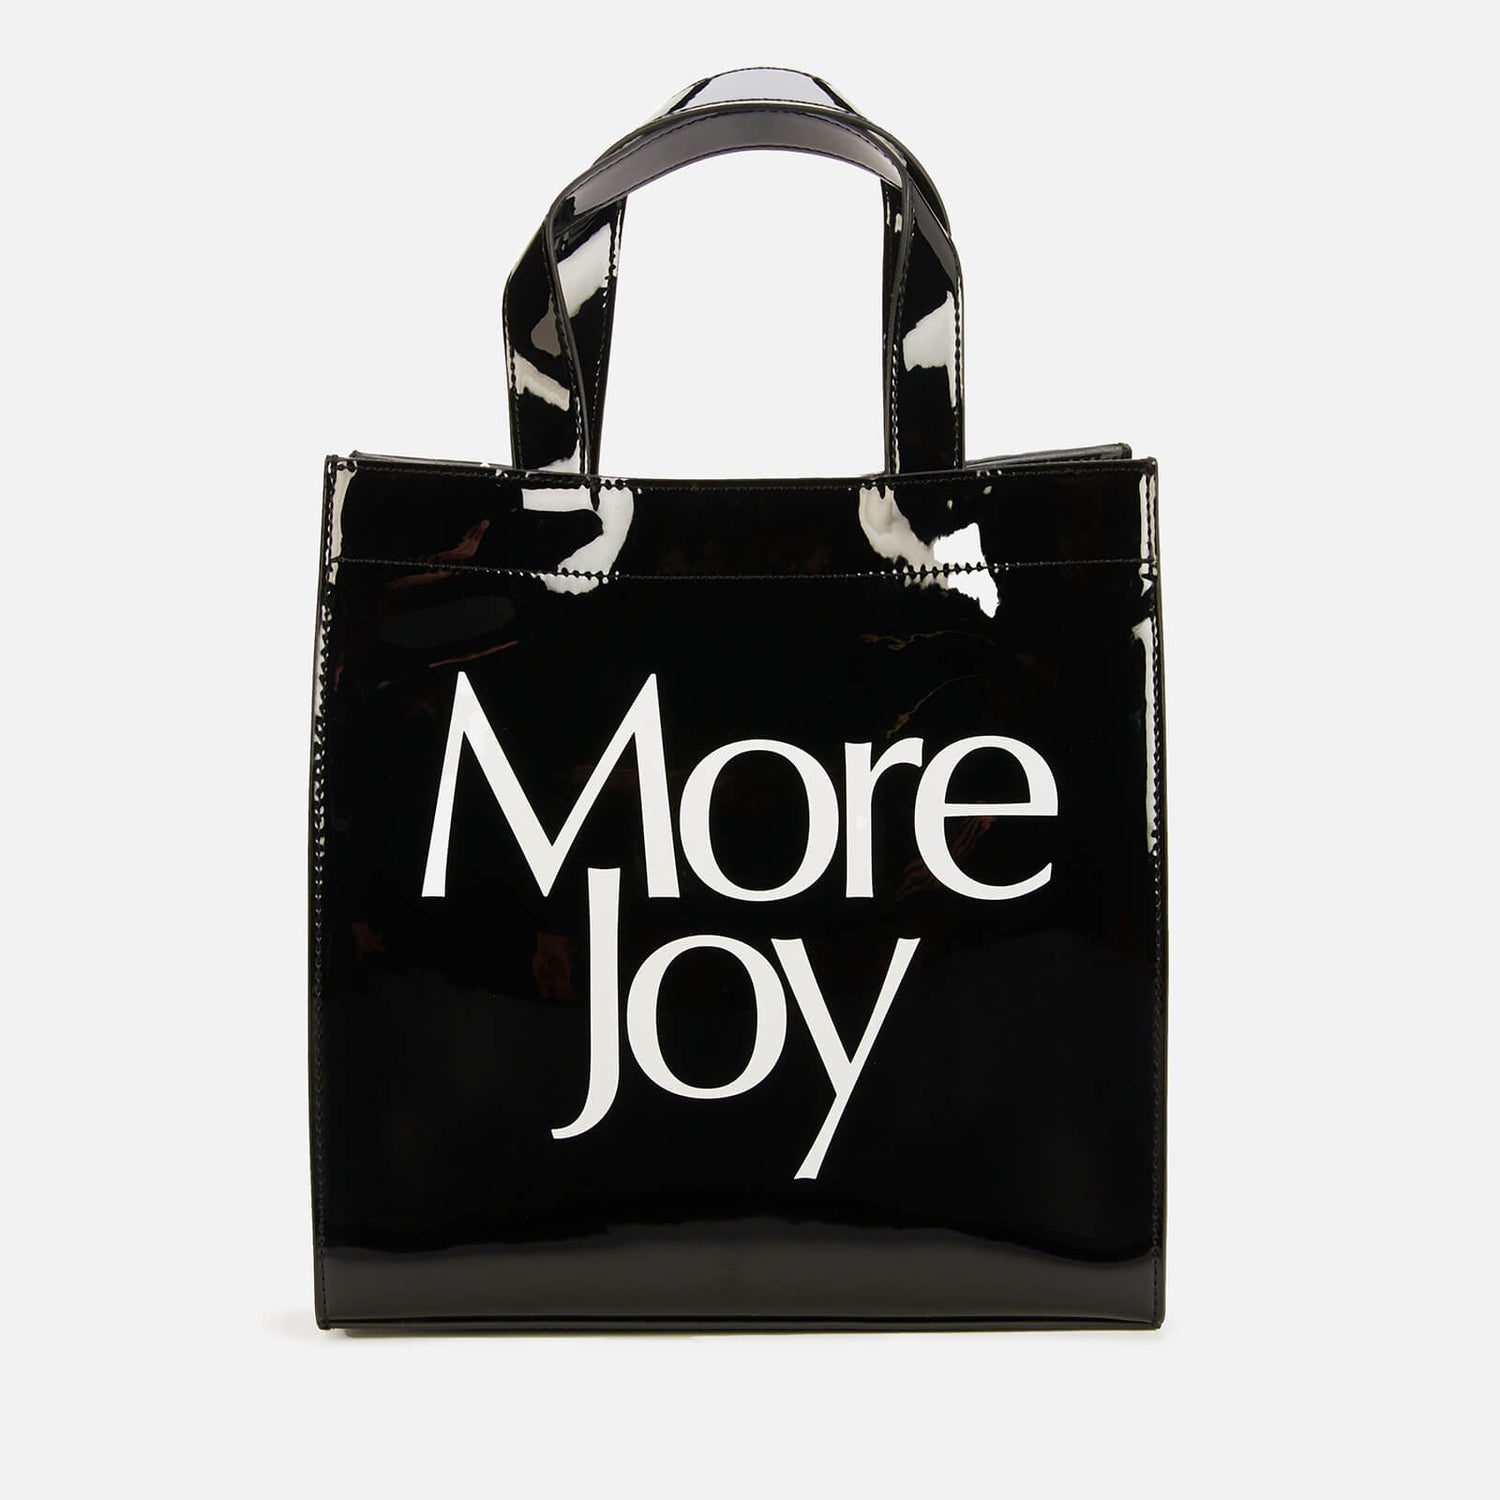 More Joy Pu Small Tote Bag - Black